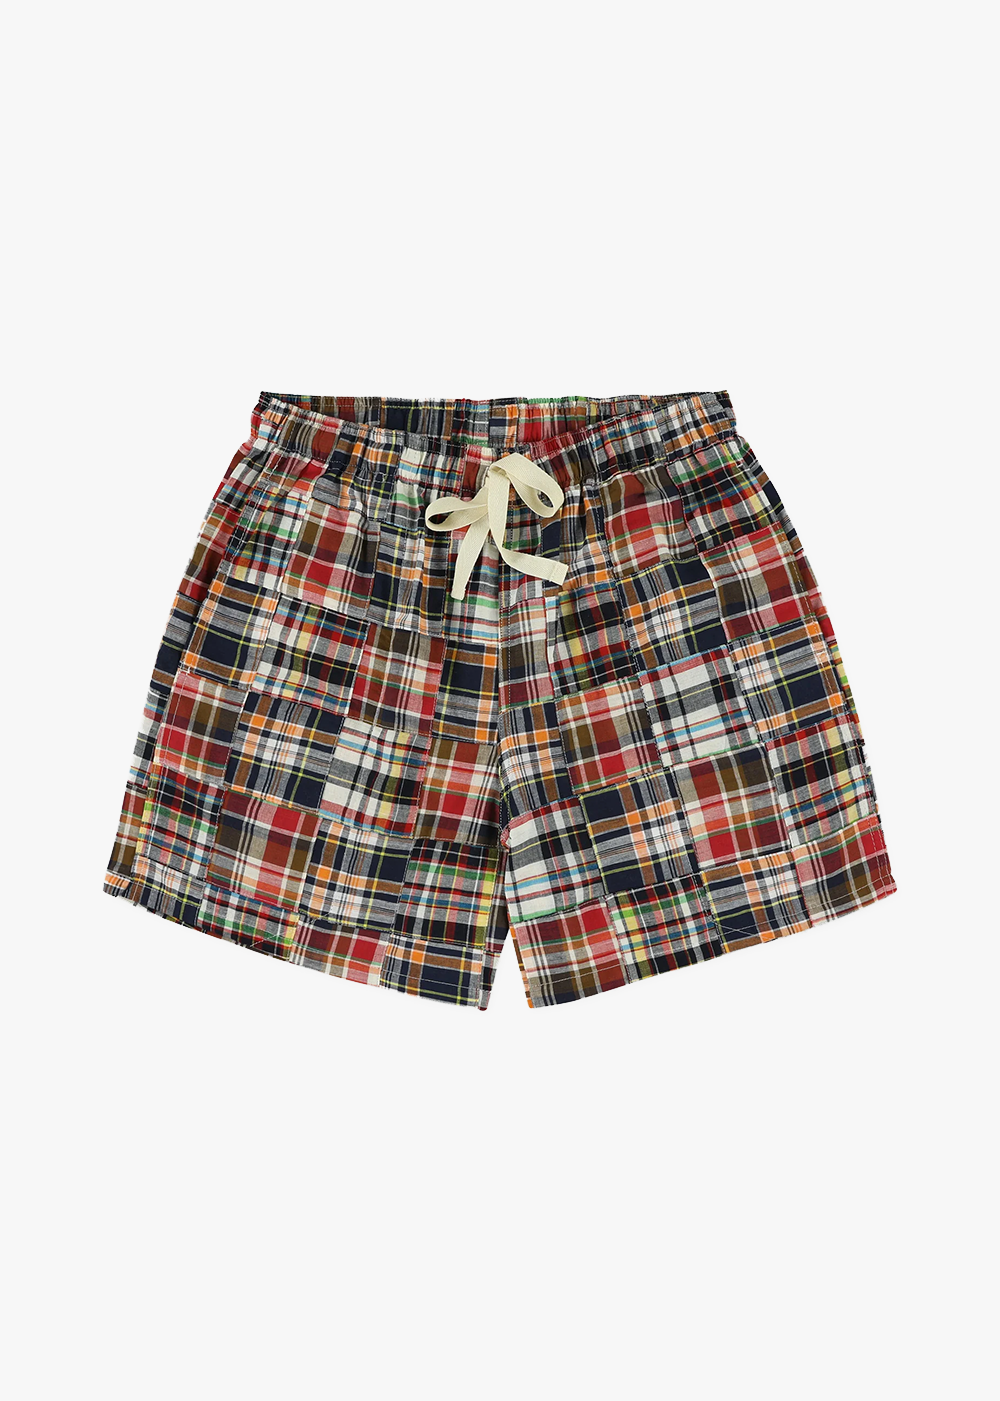 Smiling Madras Shorts - Multi Patchwork - Howlin' Knitwear Canada - Danali